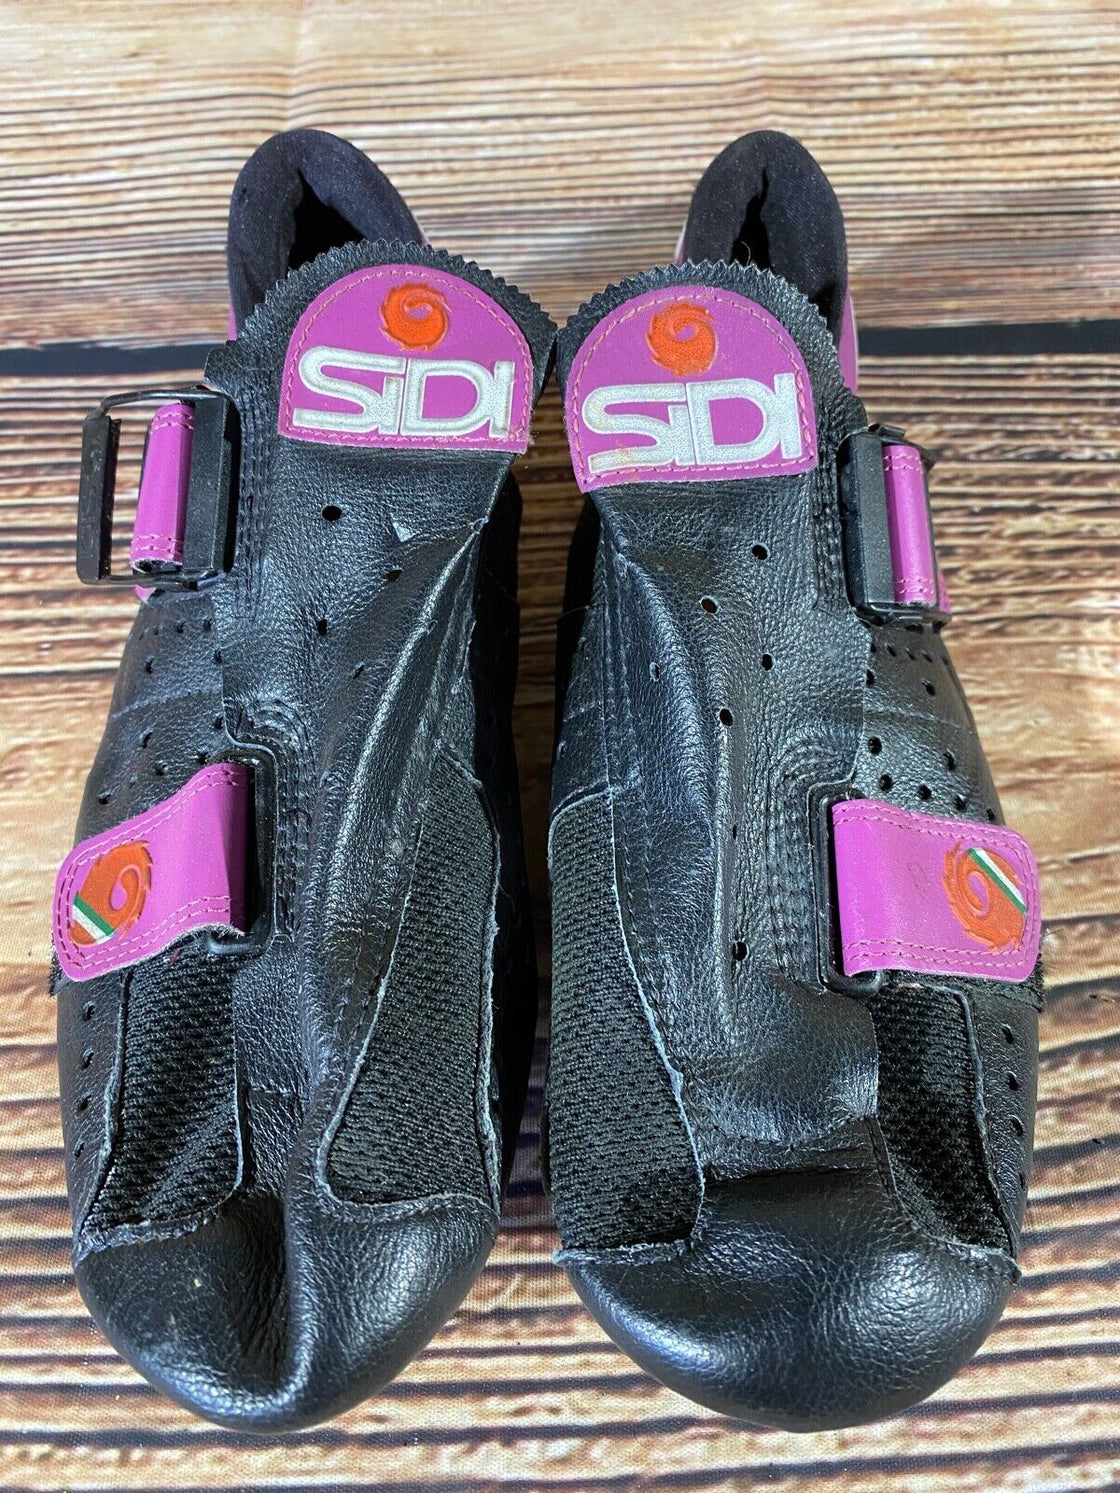 SIDI Vintage Road Cycling Shoes Biking Boots Size EU42, US8, Mondo 252 RARE